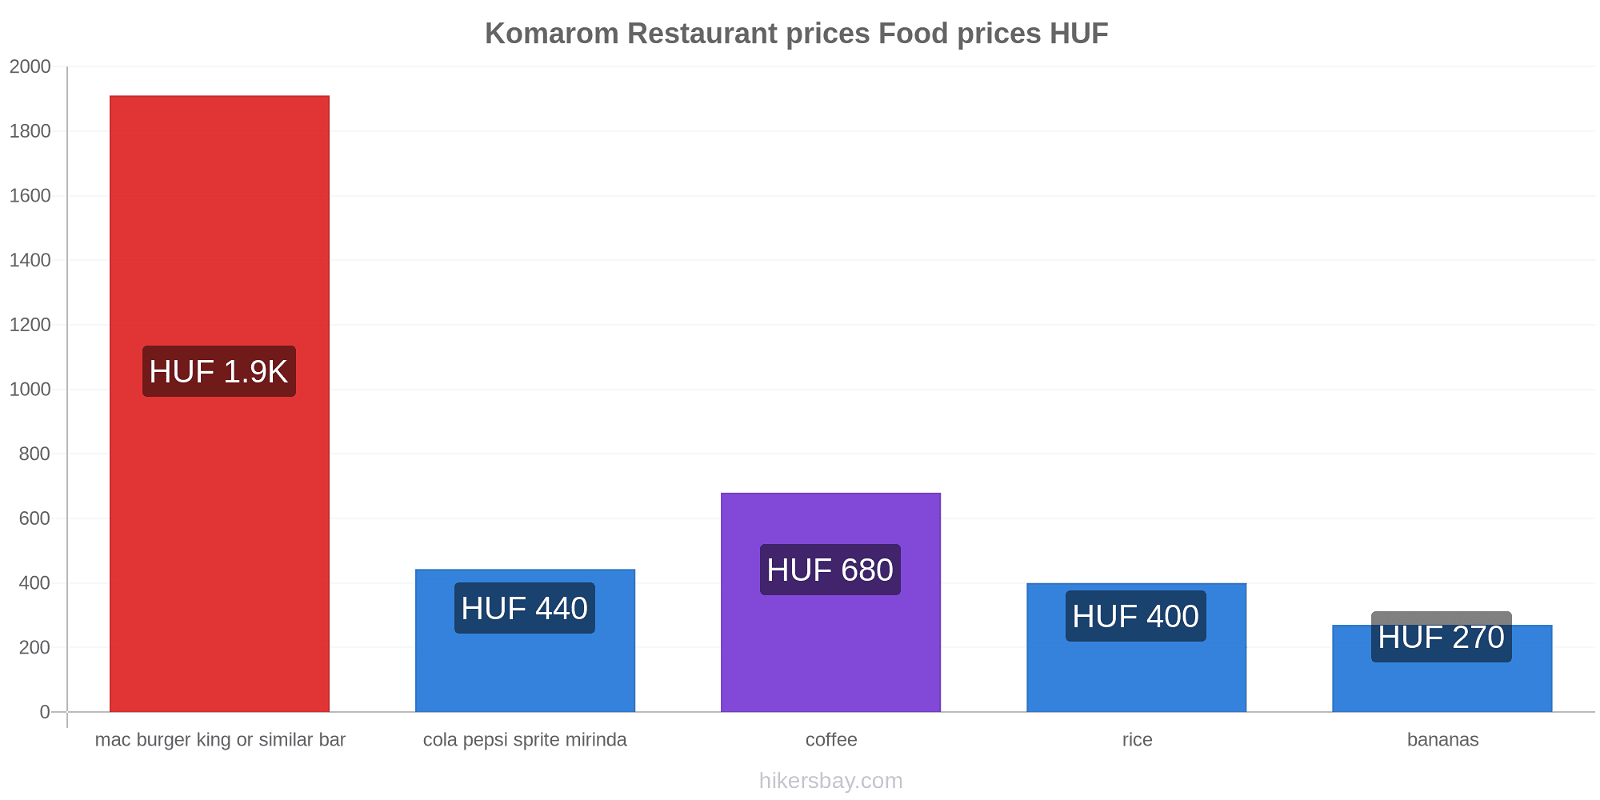 Komarom price changes hikersbay.com